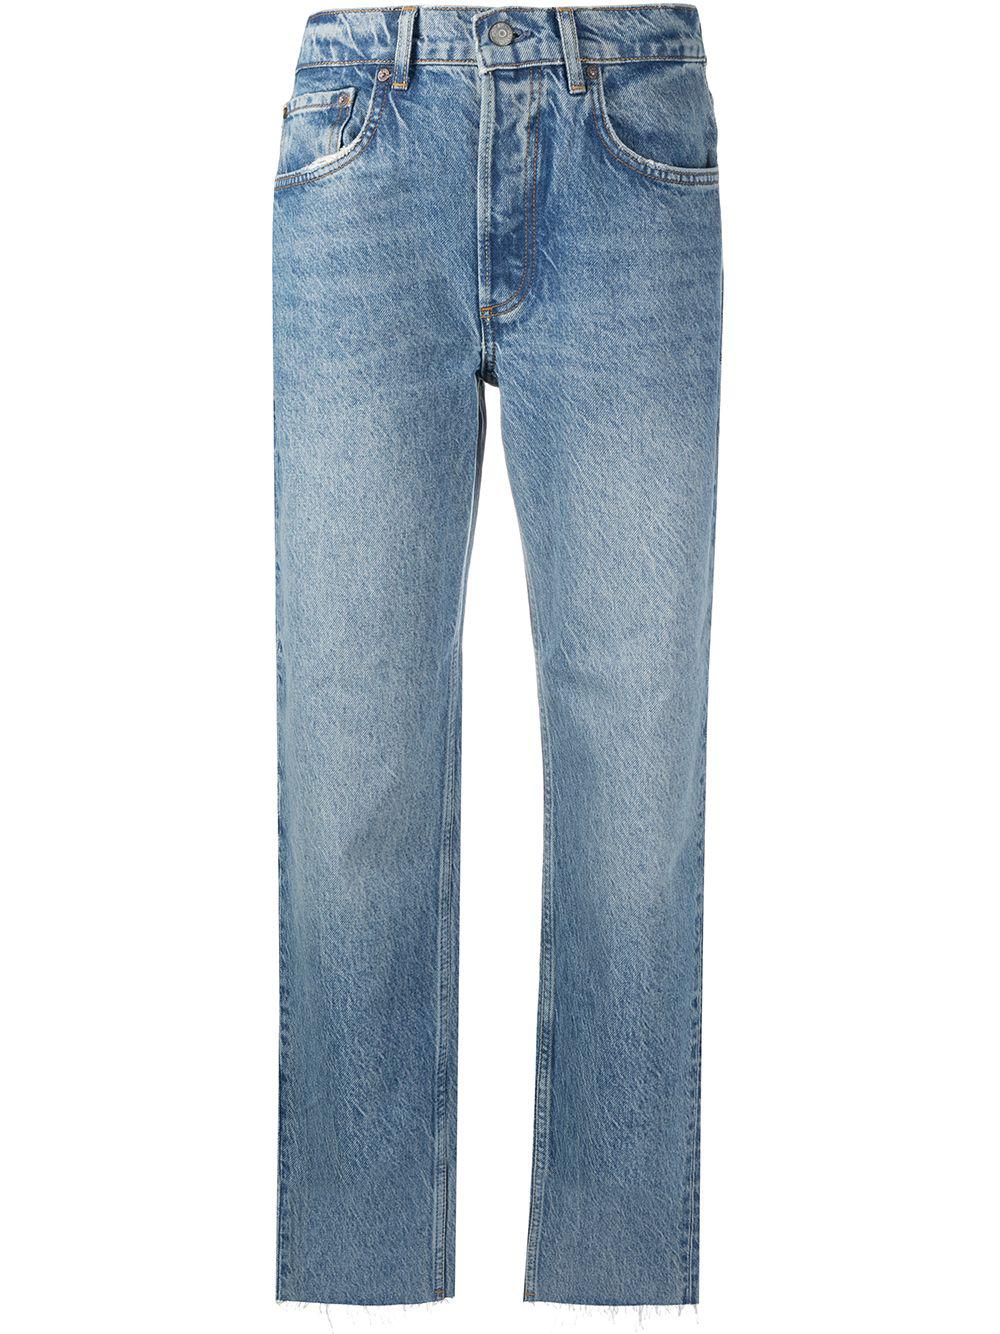 mid-rise cropped leg jeans by BOYISH